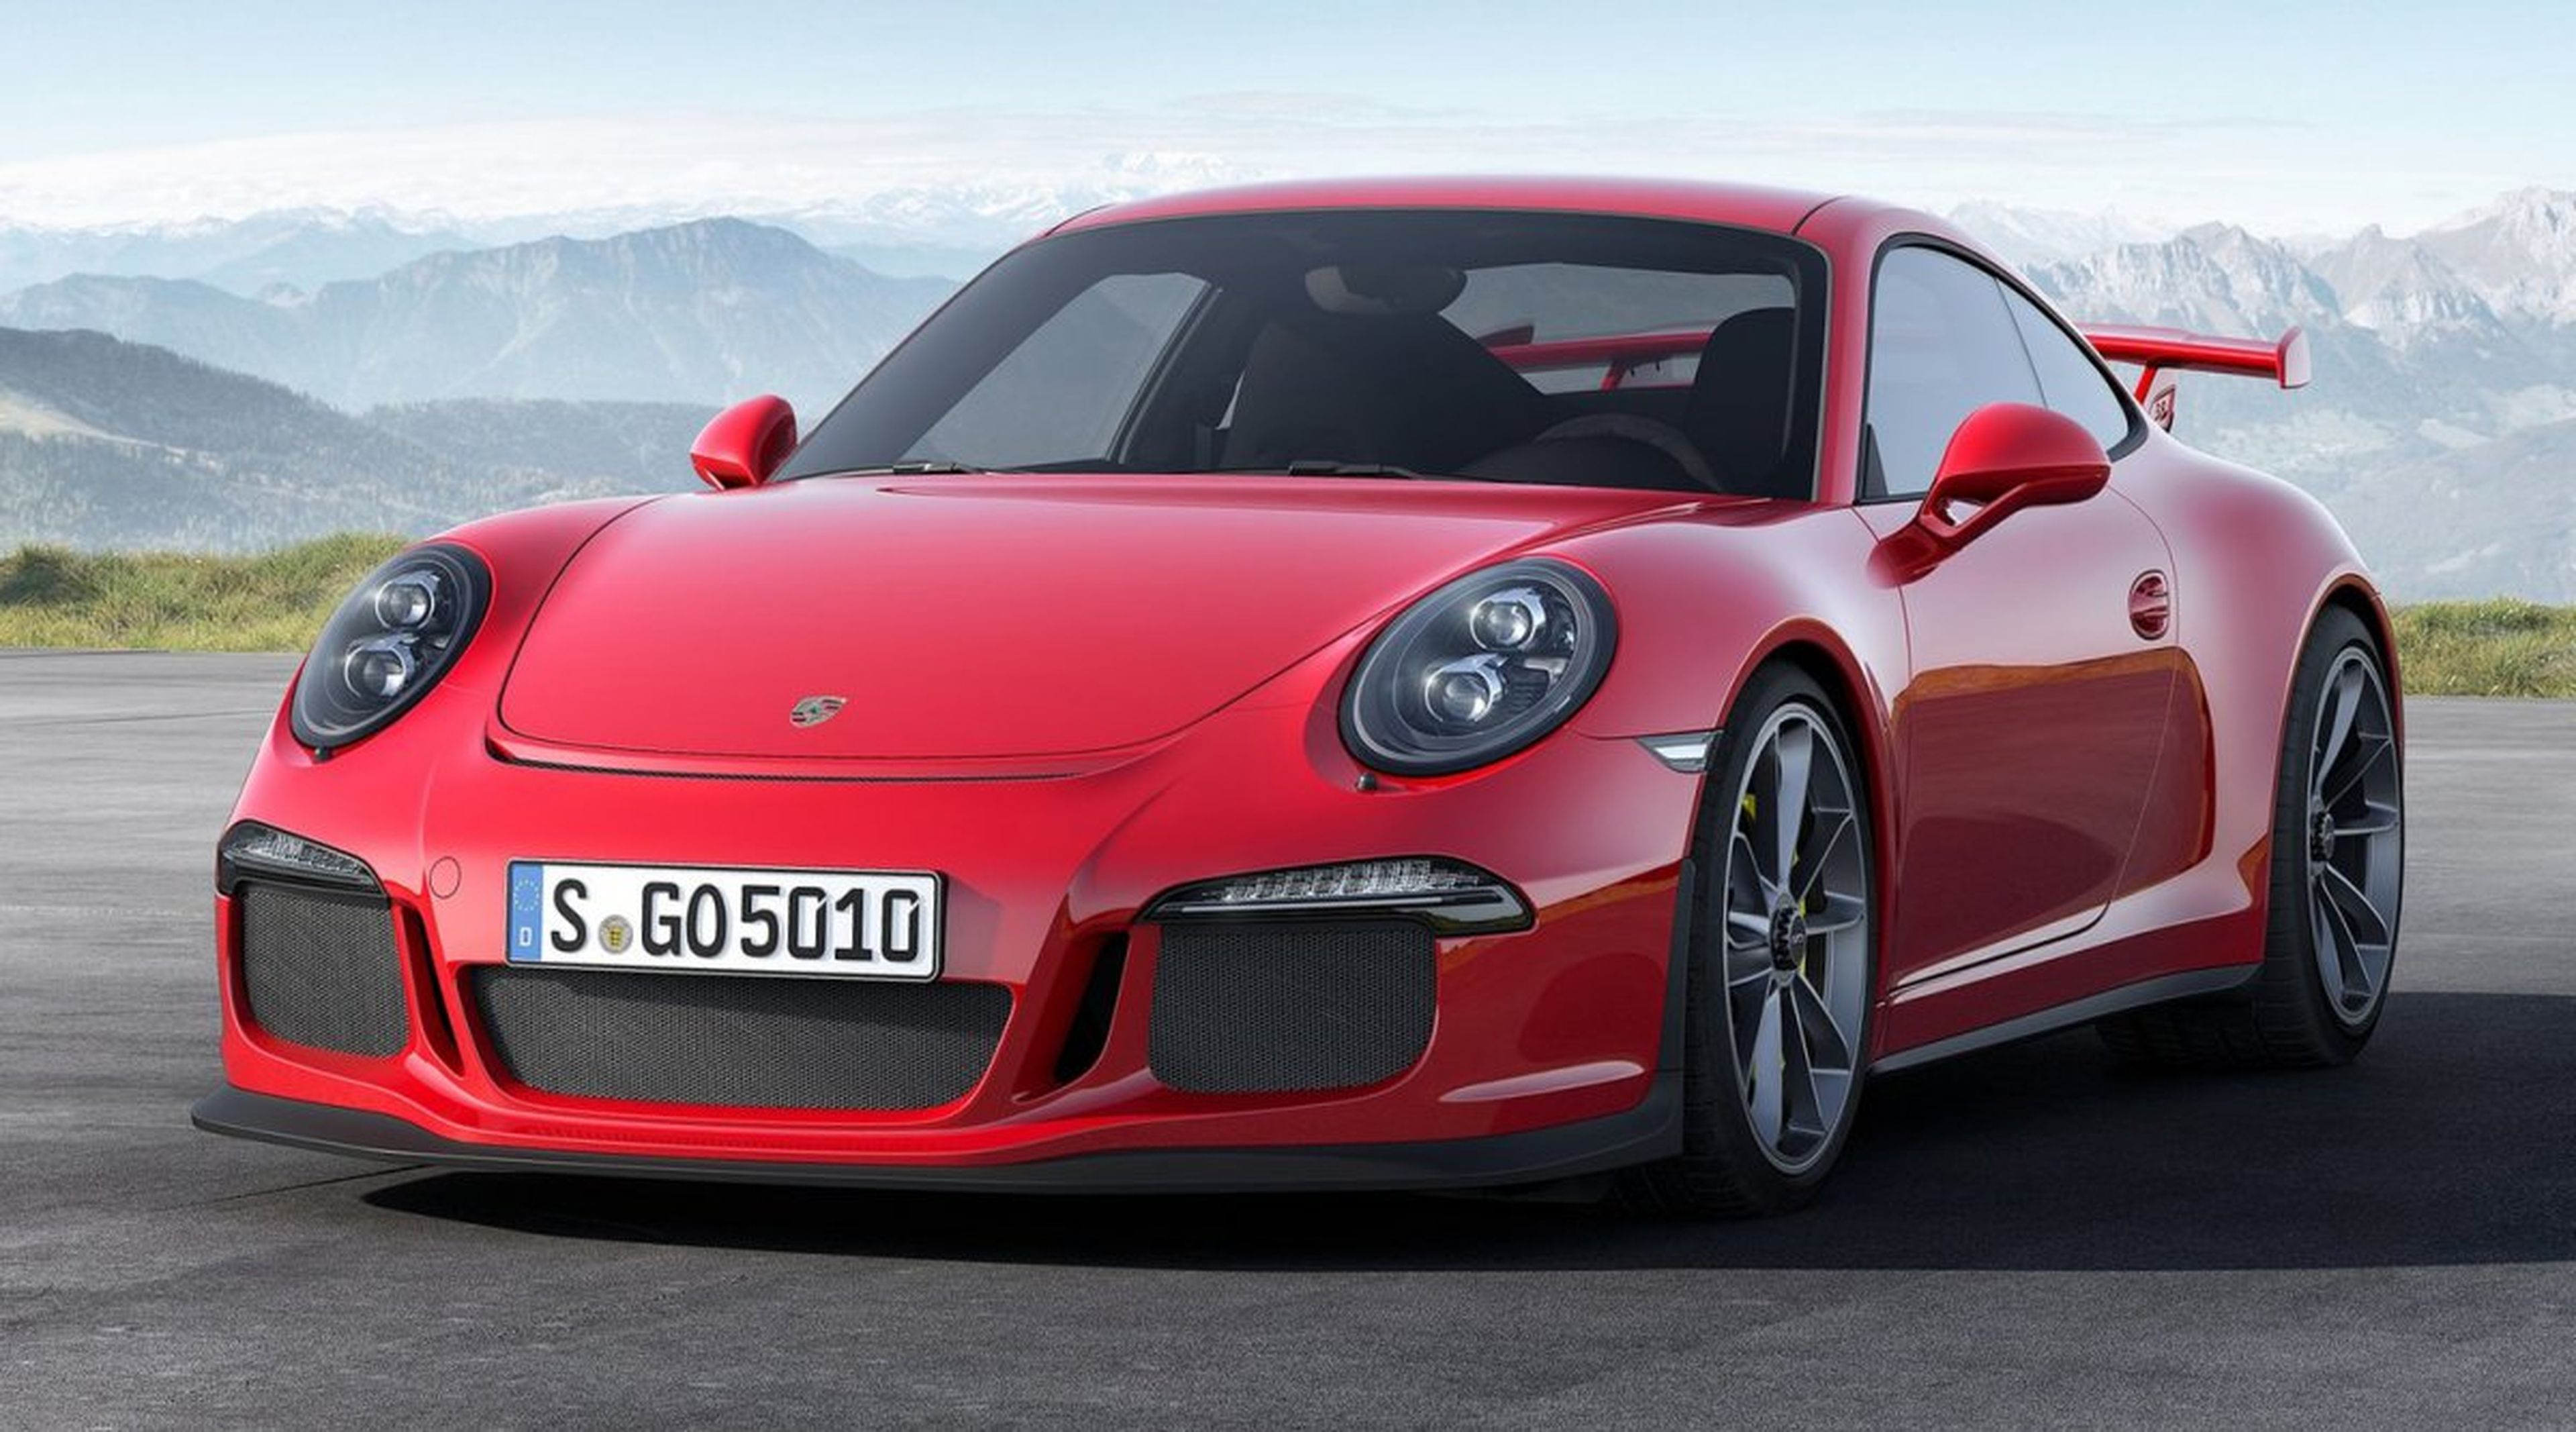 Confirmado: ¡habrá un Porsche 911 híbrido!